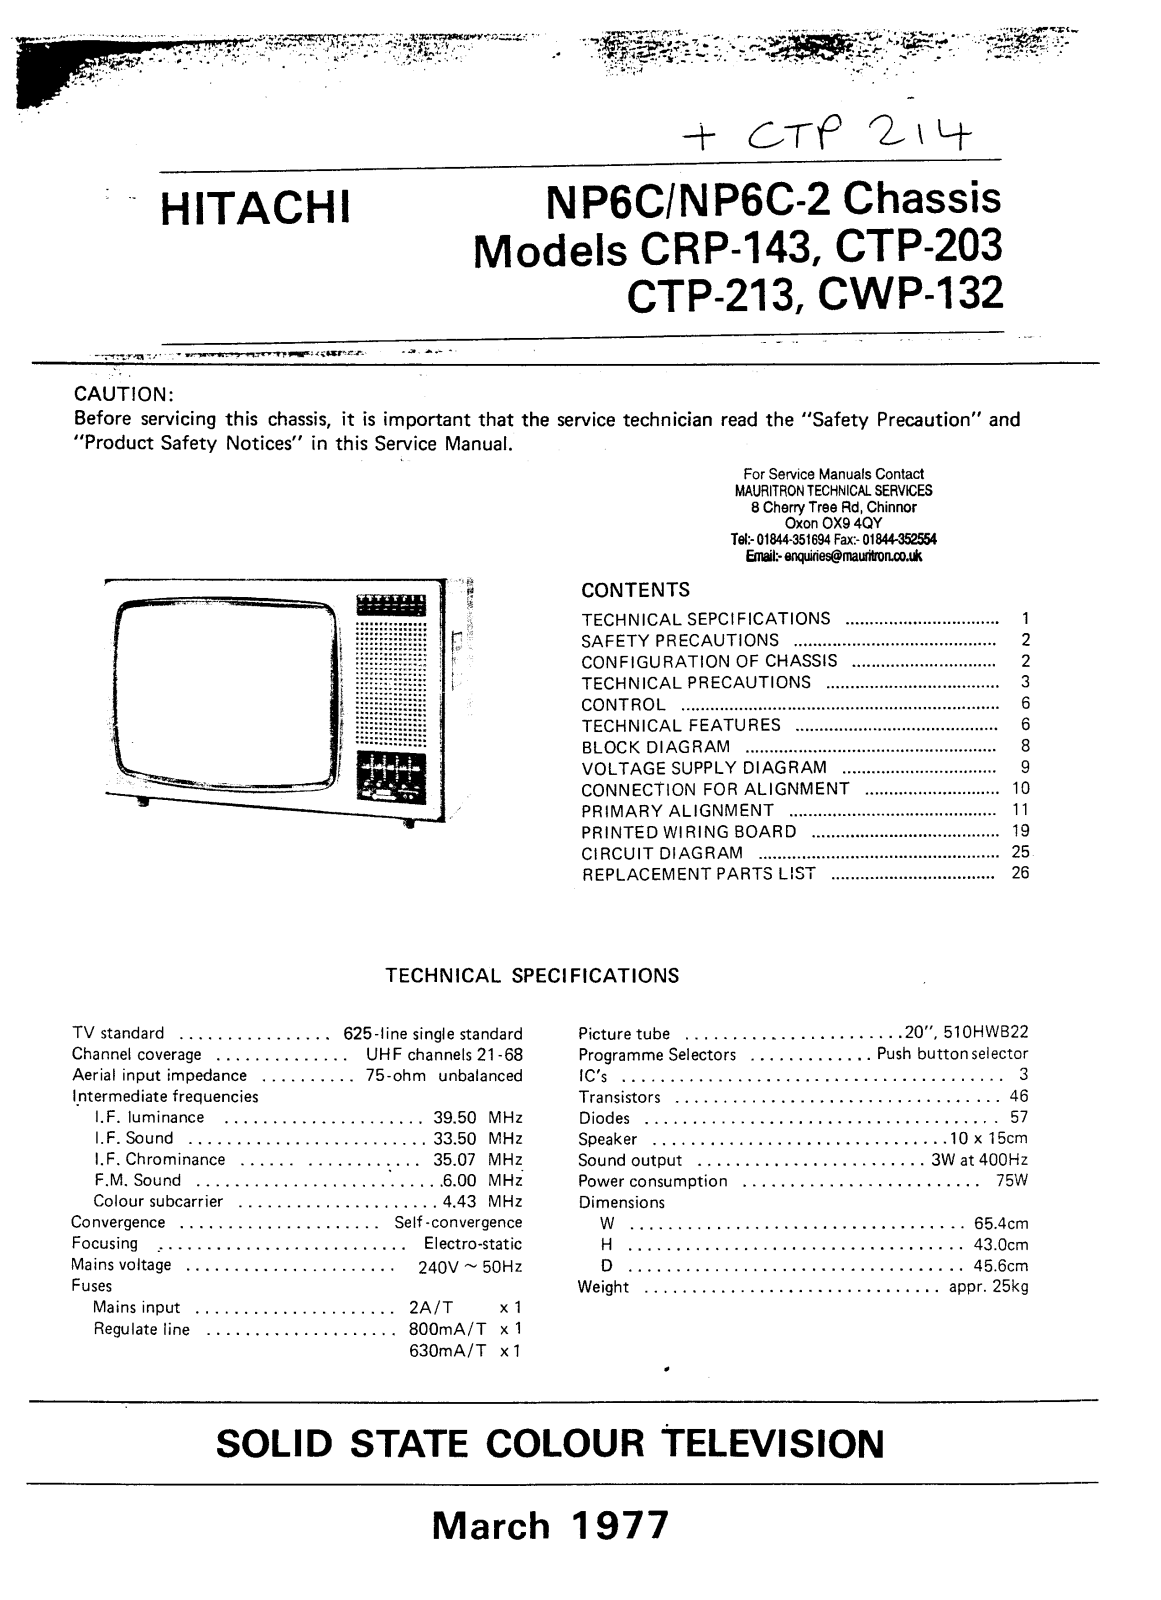 HITACHI CTP-203, CTP-213, CWP-132 Service Manual